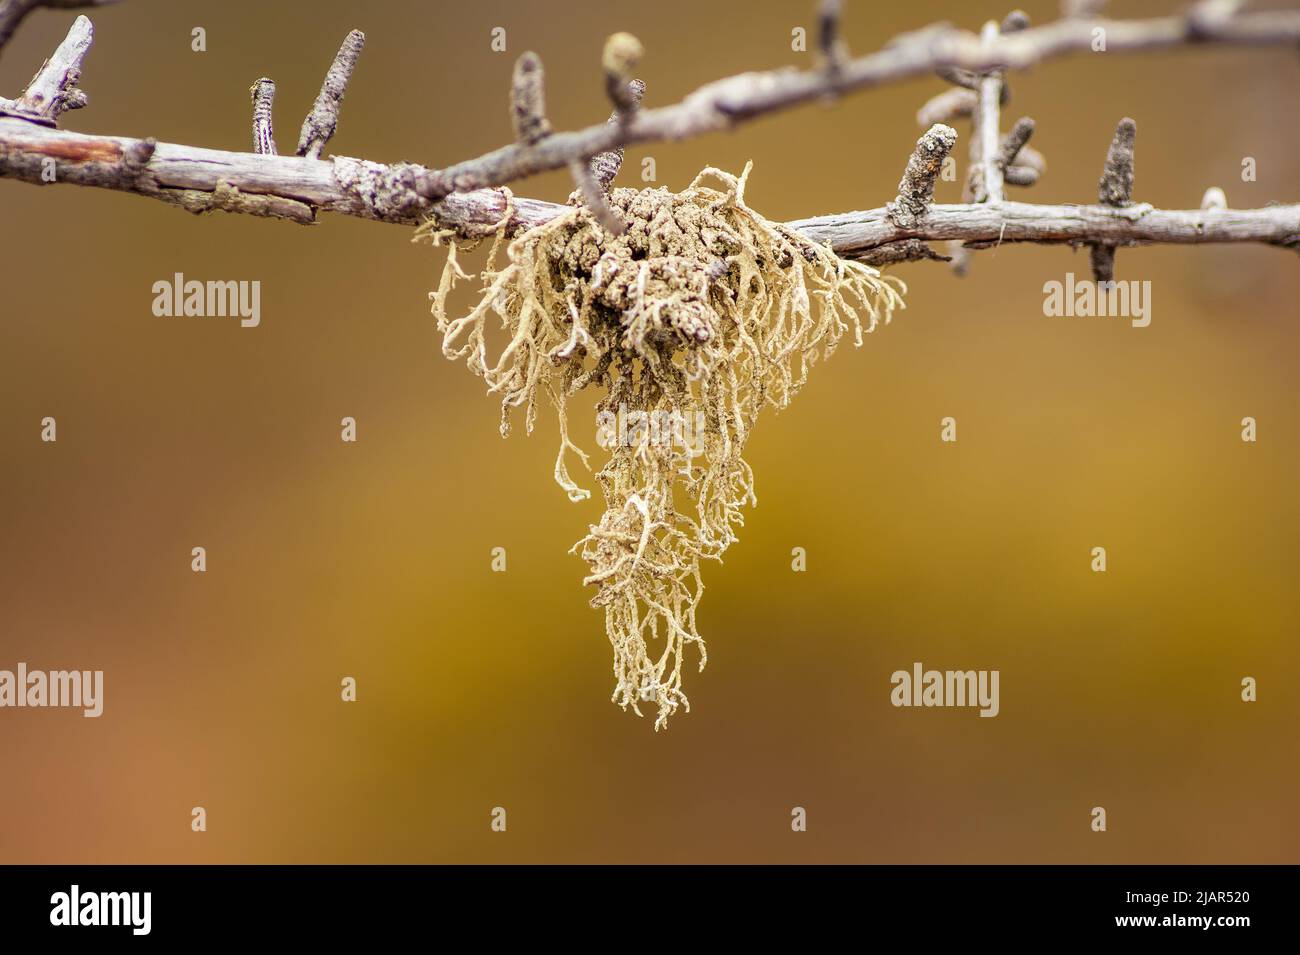 Closeup of a beard lichen (Usnea hirta) on a twig. Selective focus photo. Paul Smith's College VIC (Visitor Interpretive Center), New York, US. Stock Photo